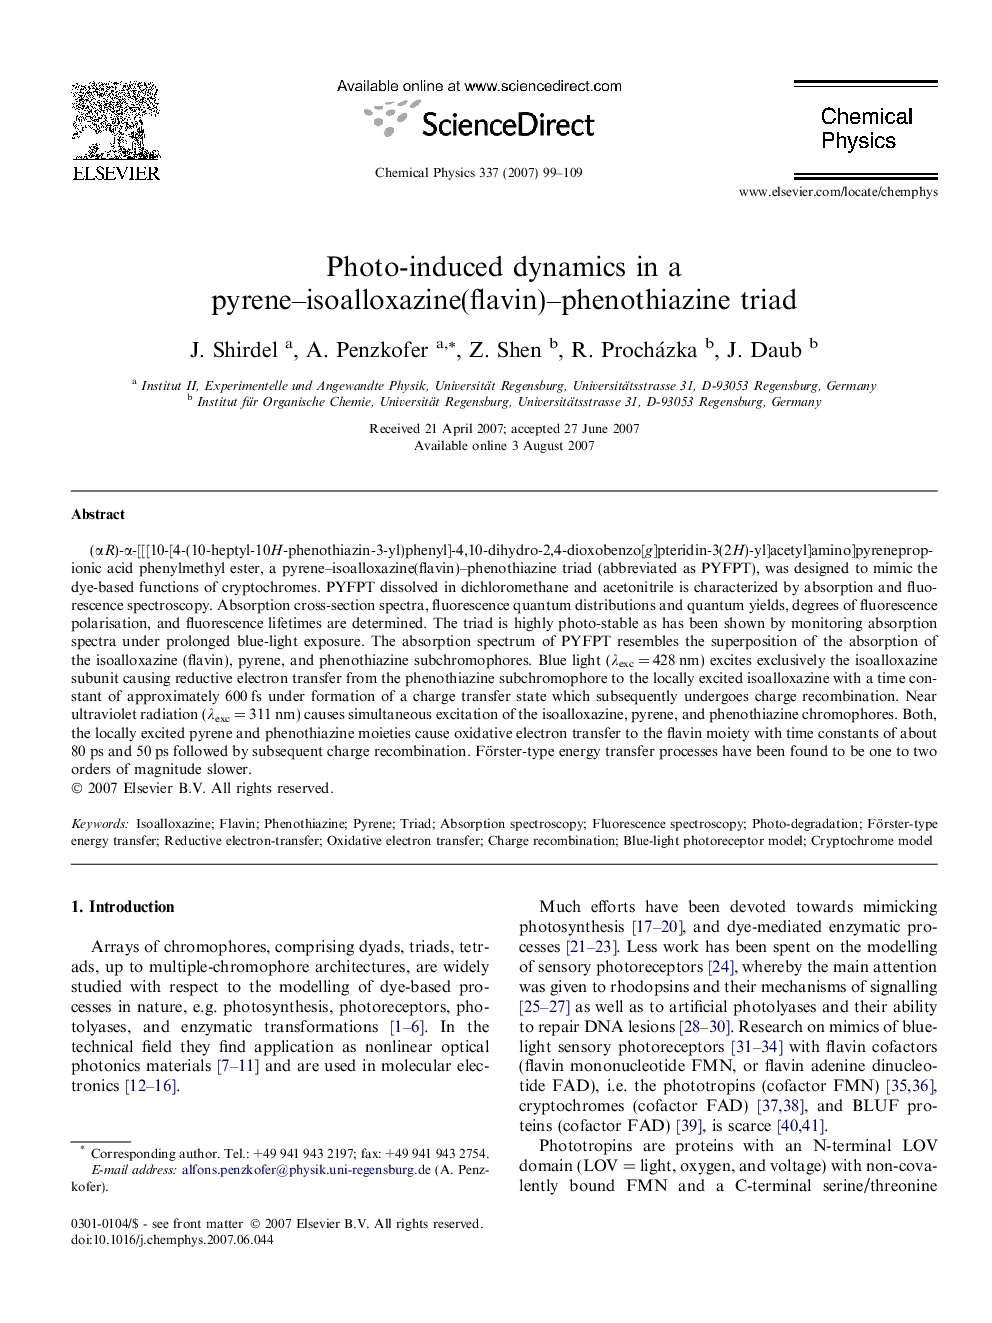 Photo-induced dynamics in a pyrene-isoalloxazine(flavin)-phenothiazine triad